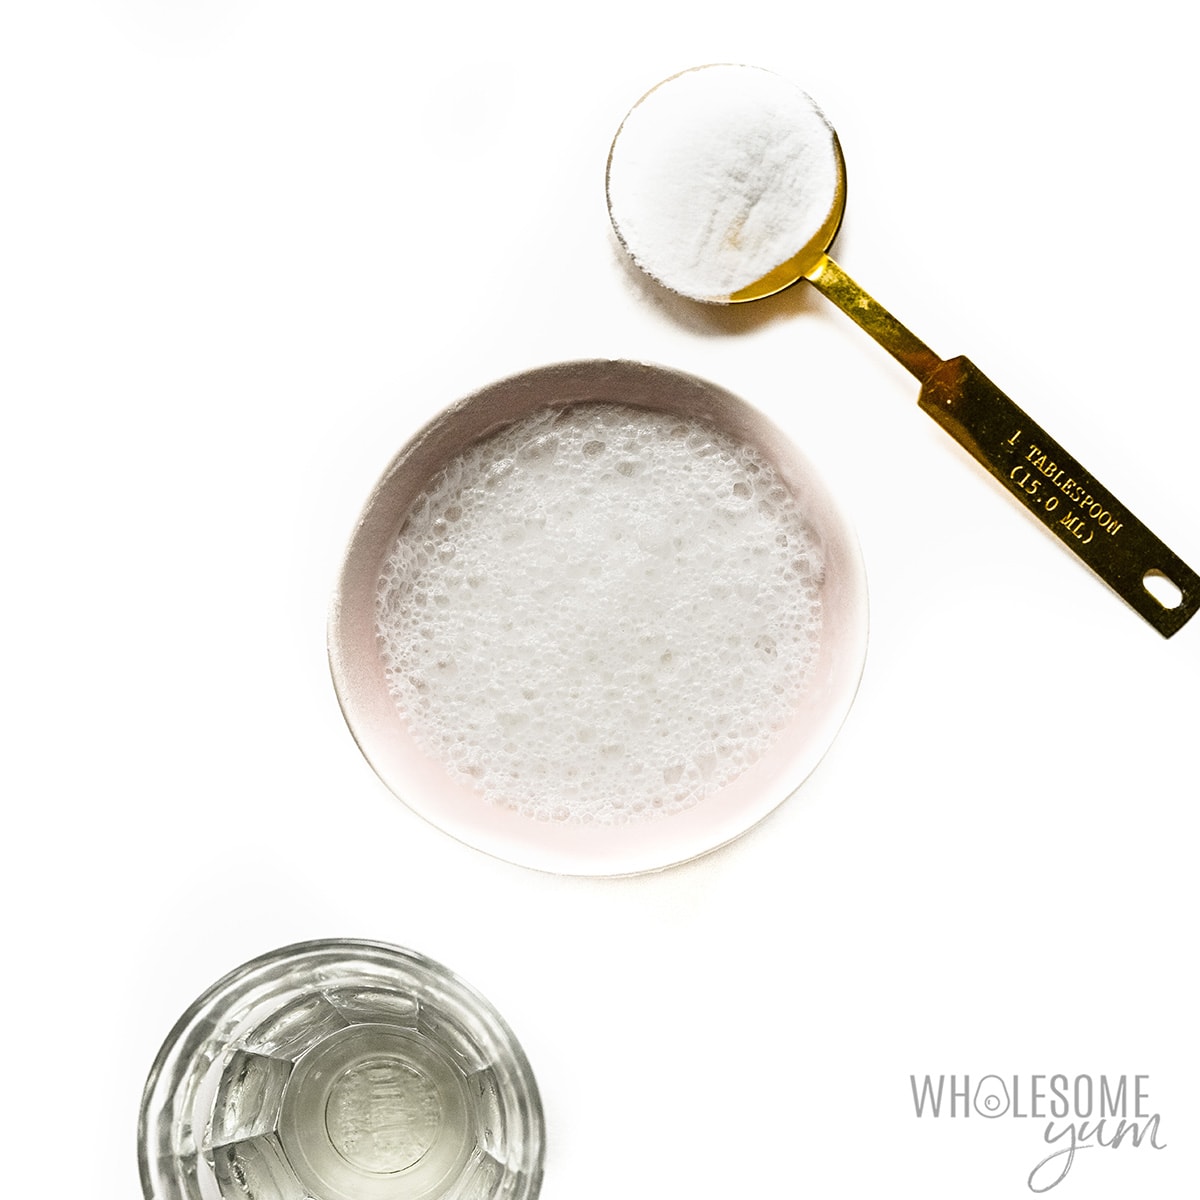 Vinegar in a glass next to baking soda.